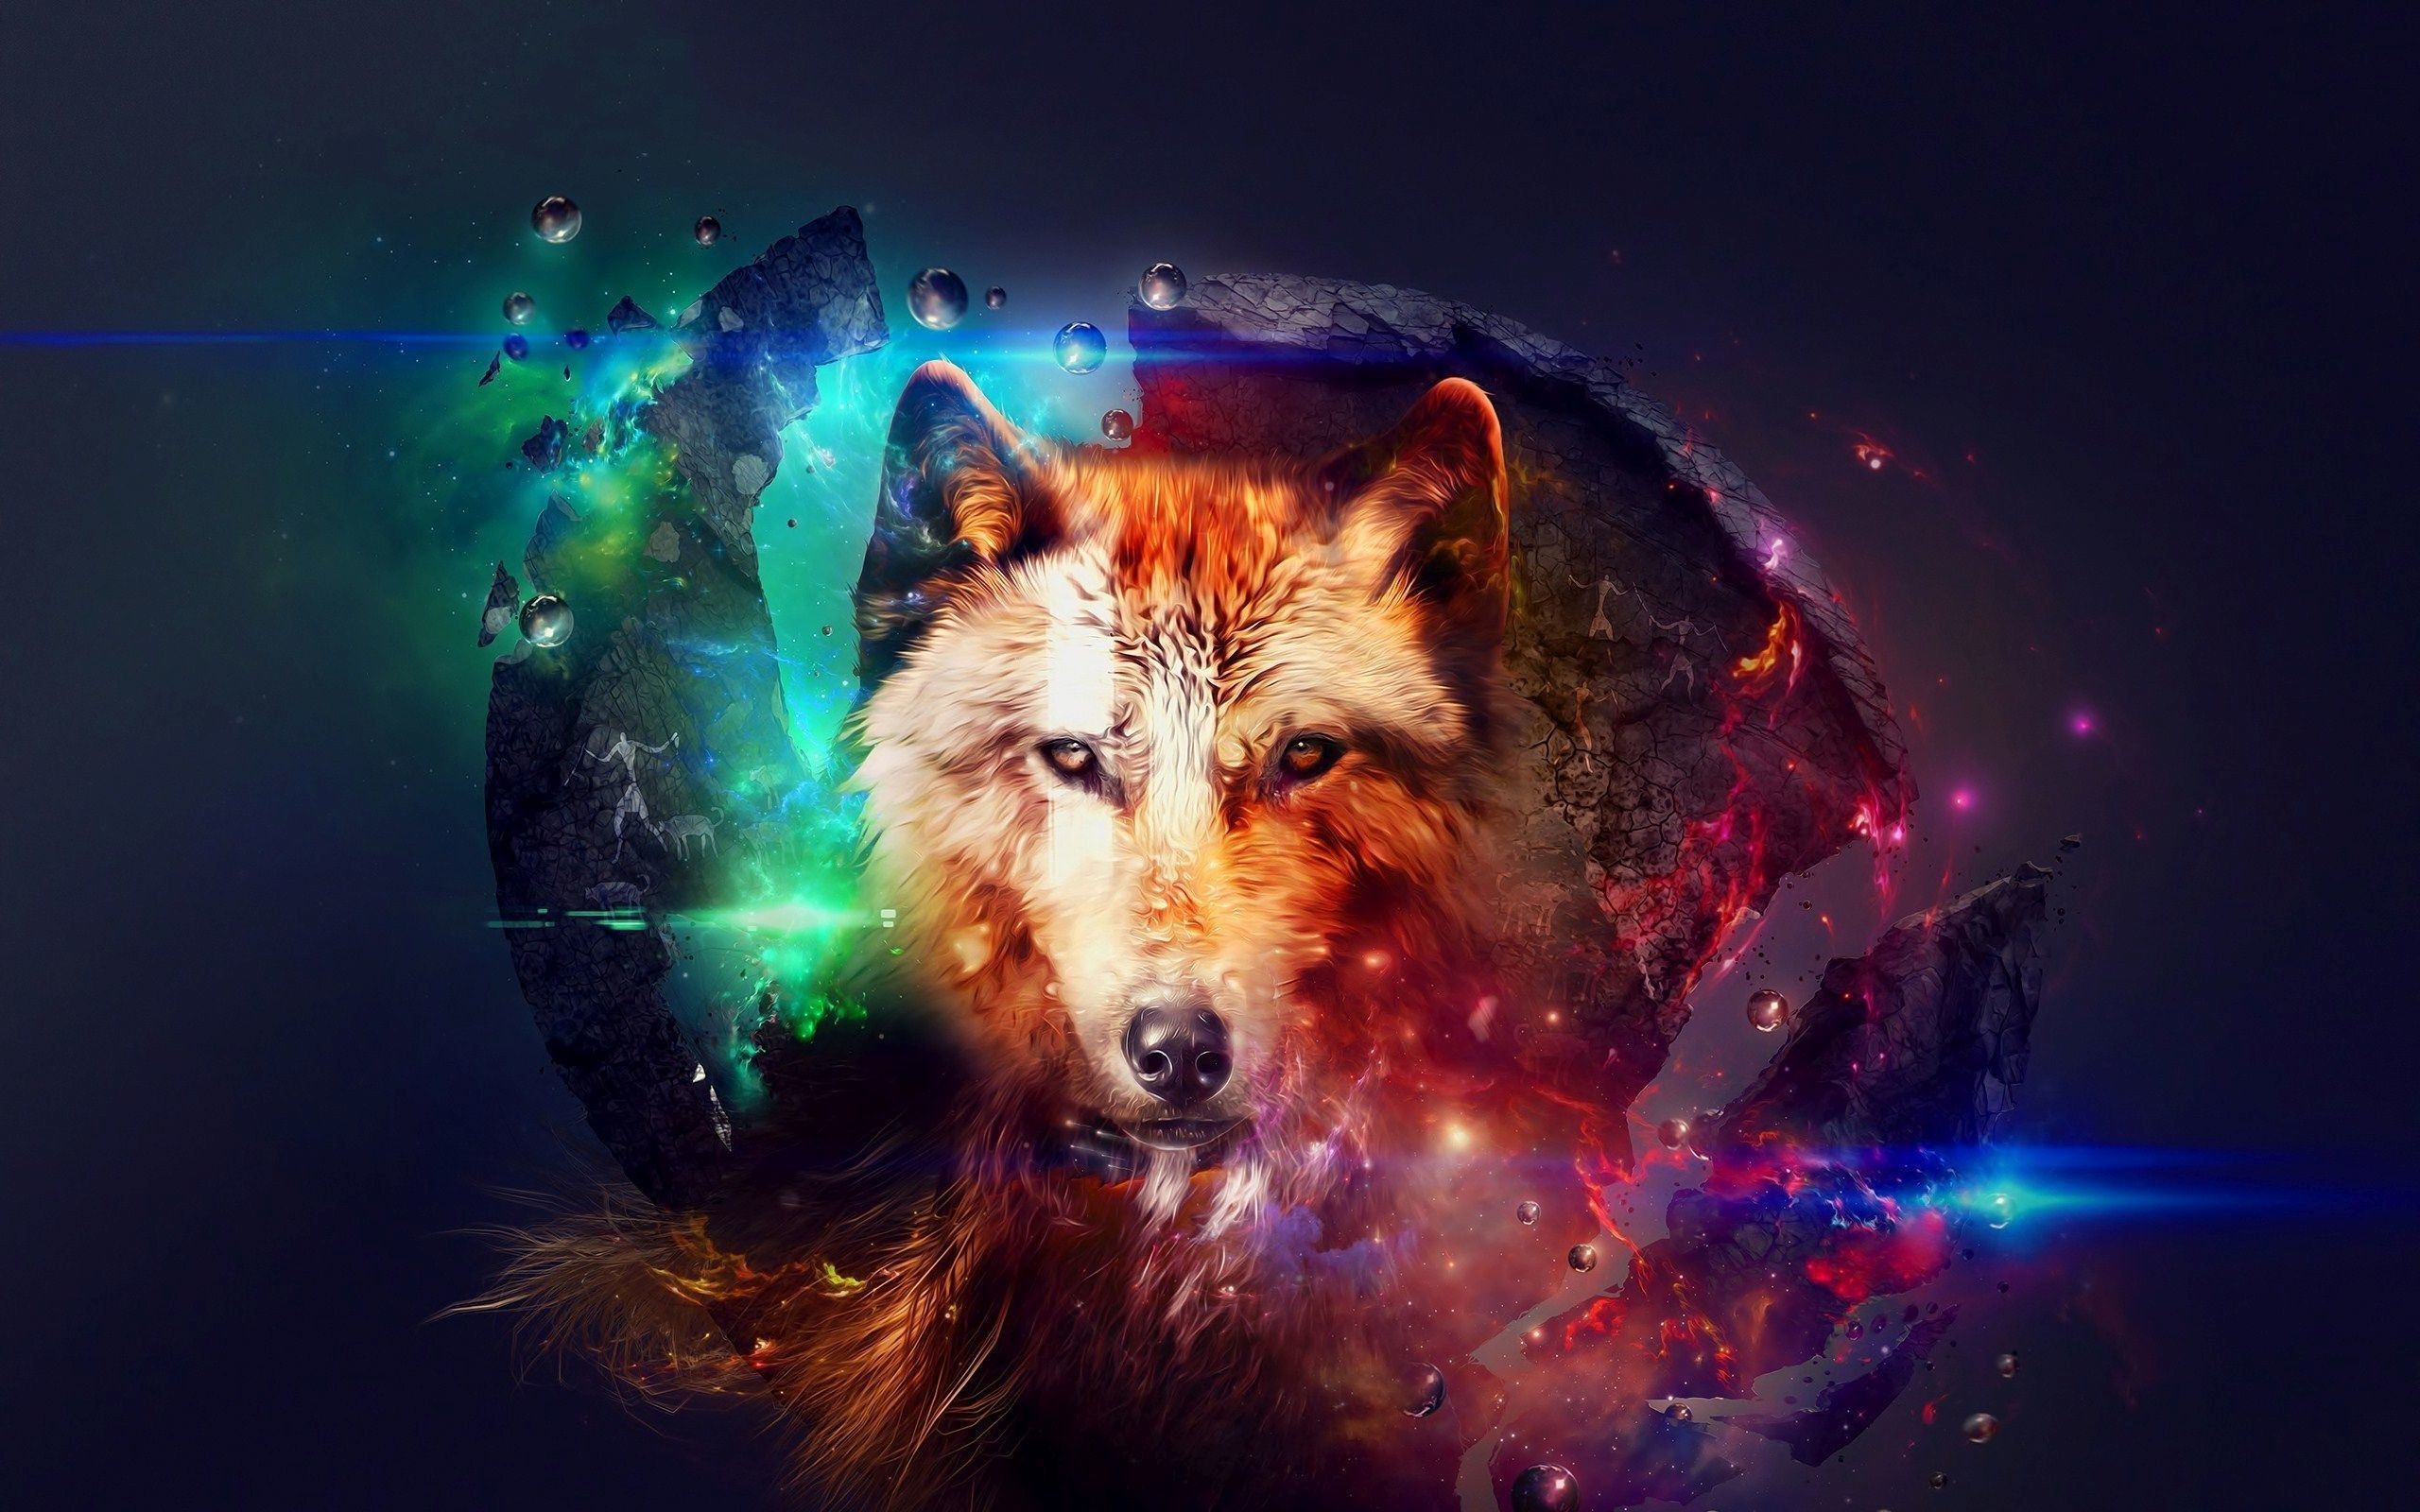 Black Wolf Galaxy Wallpaper